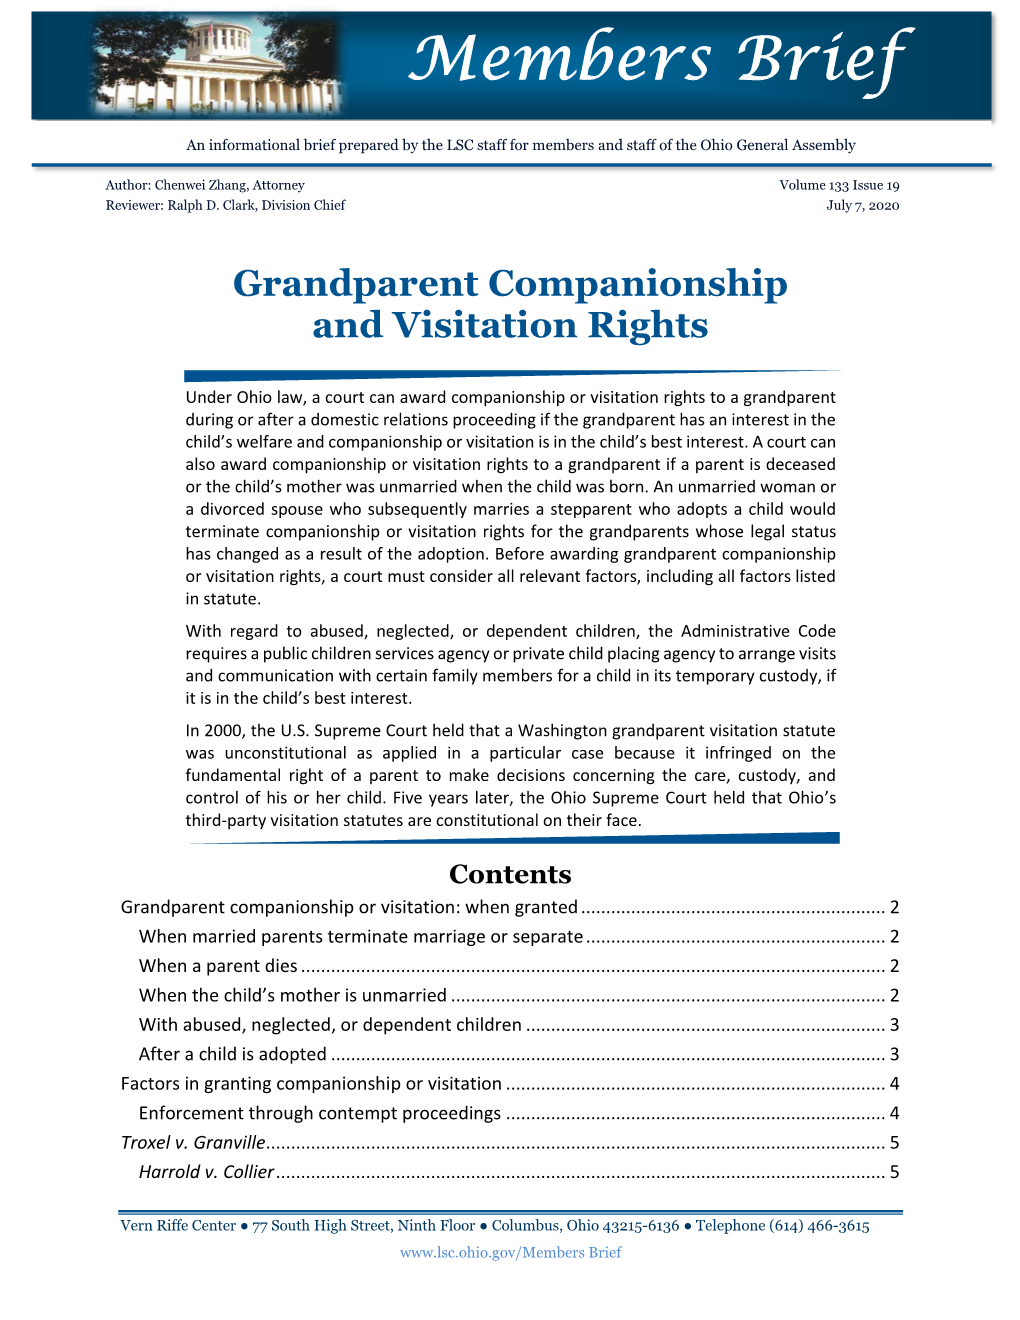 Grandparent Companionship and Visitation Rights